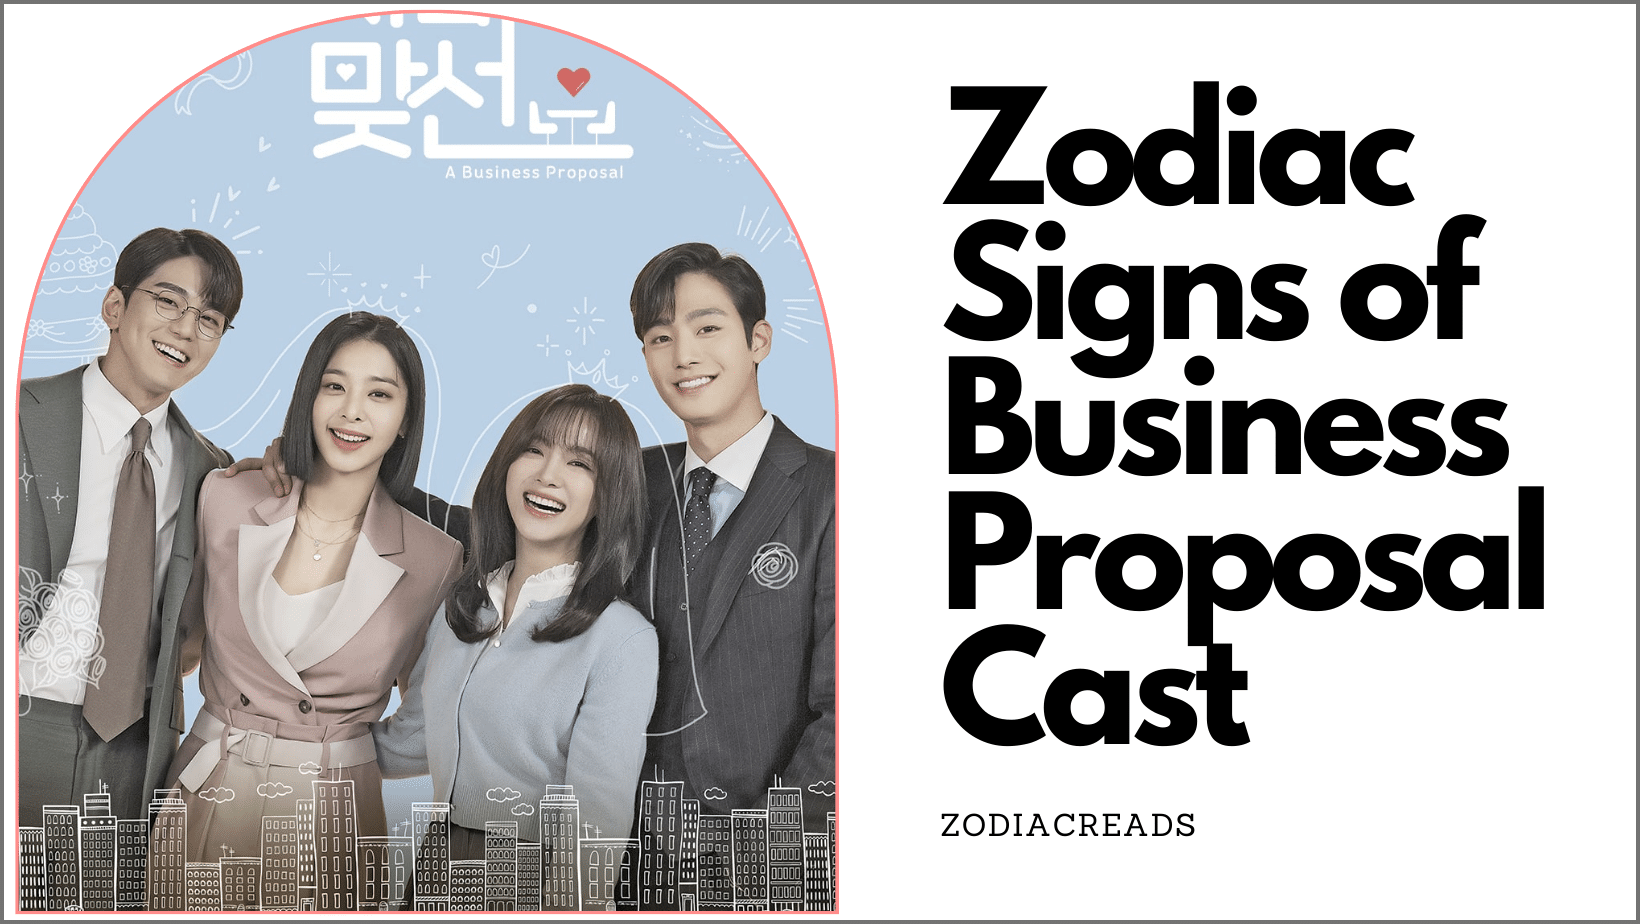 Zodiac signs of business proposal cast zodiacreads